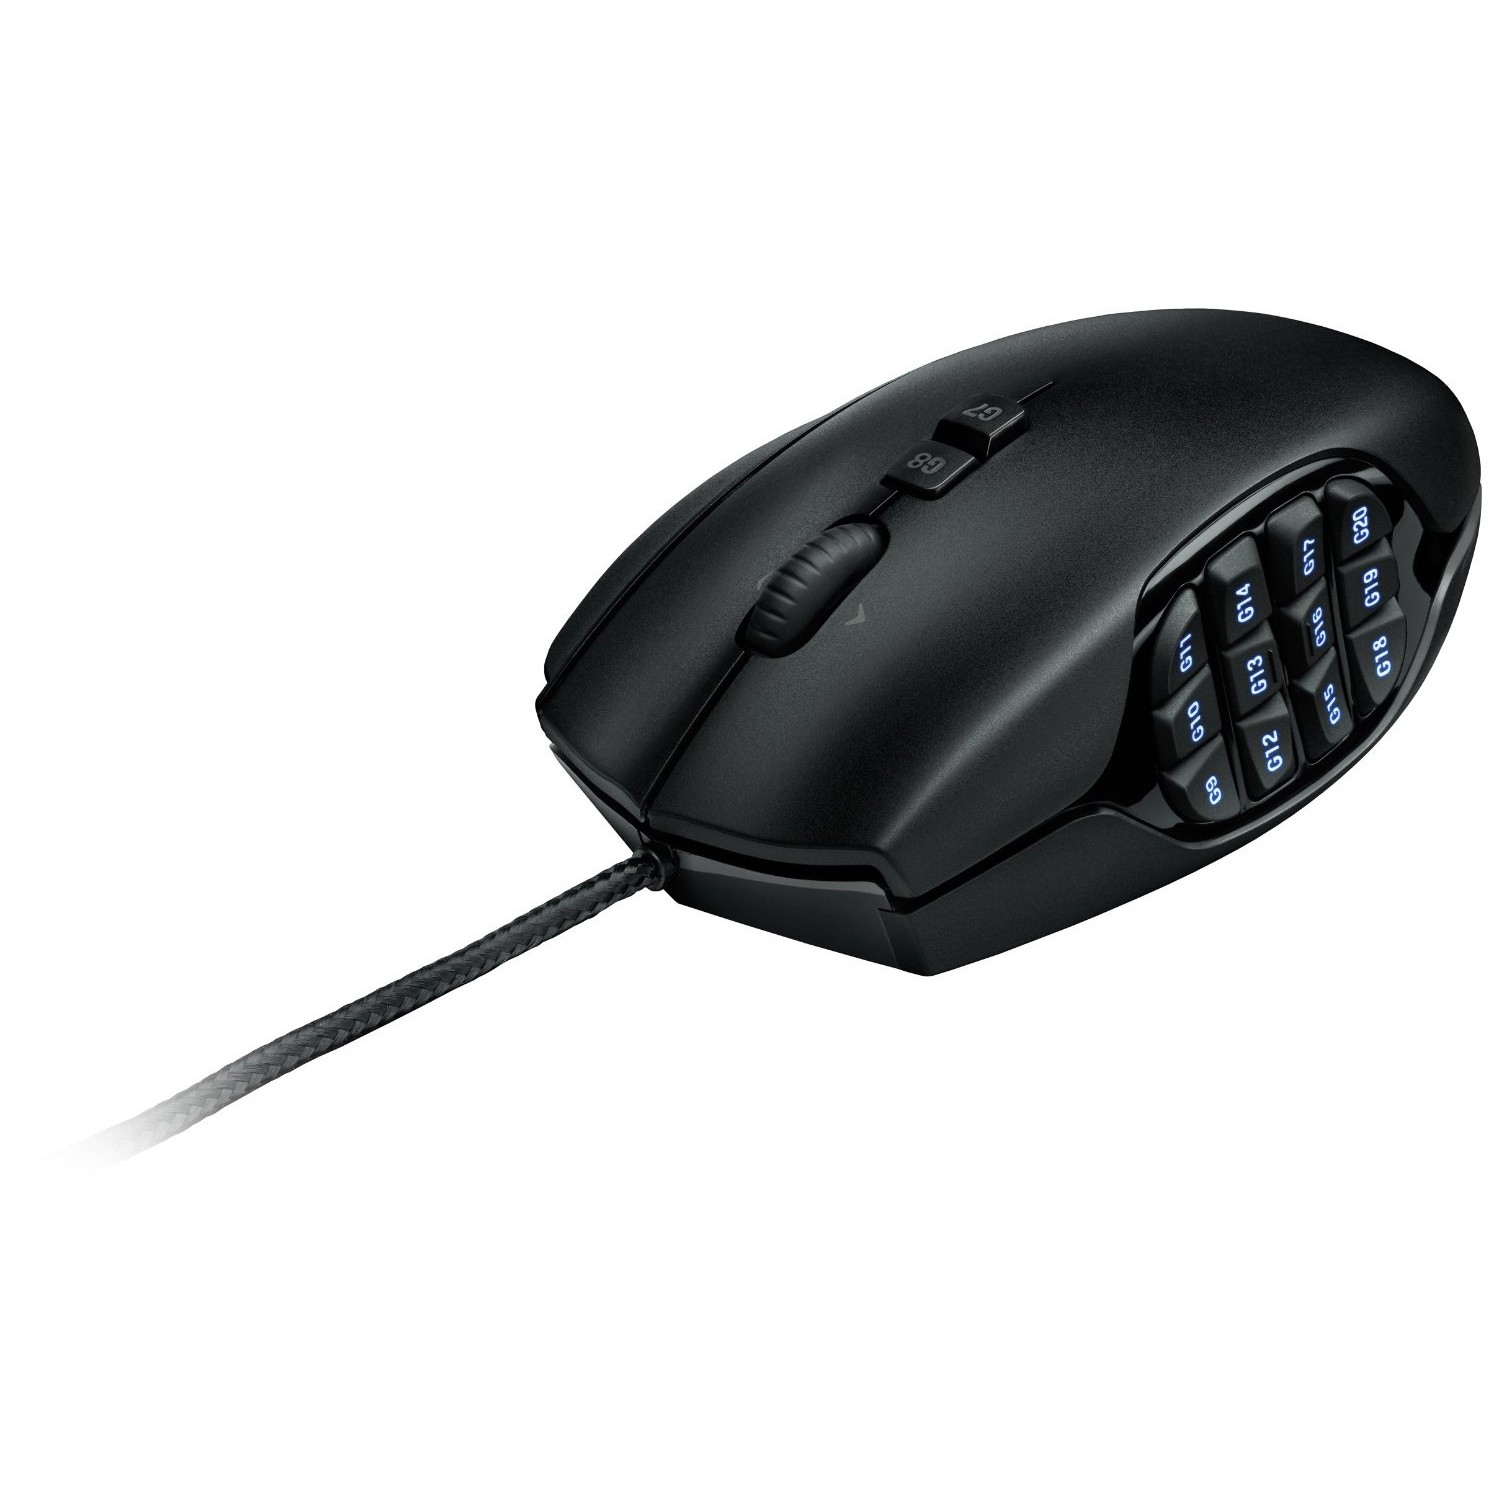 Logitech G600 MMO Black Gaming Mouse-6